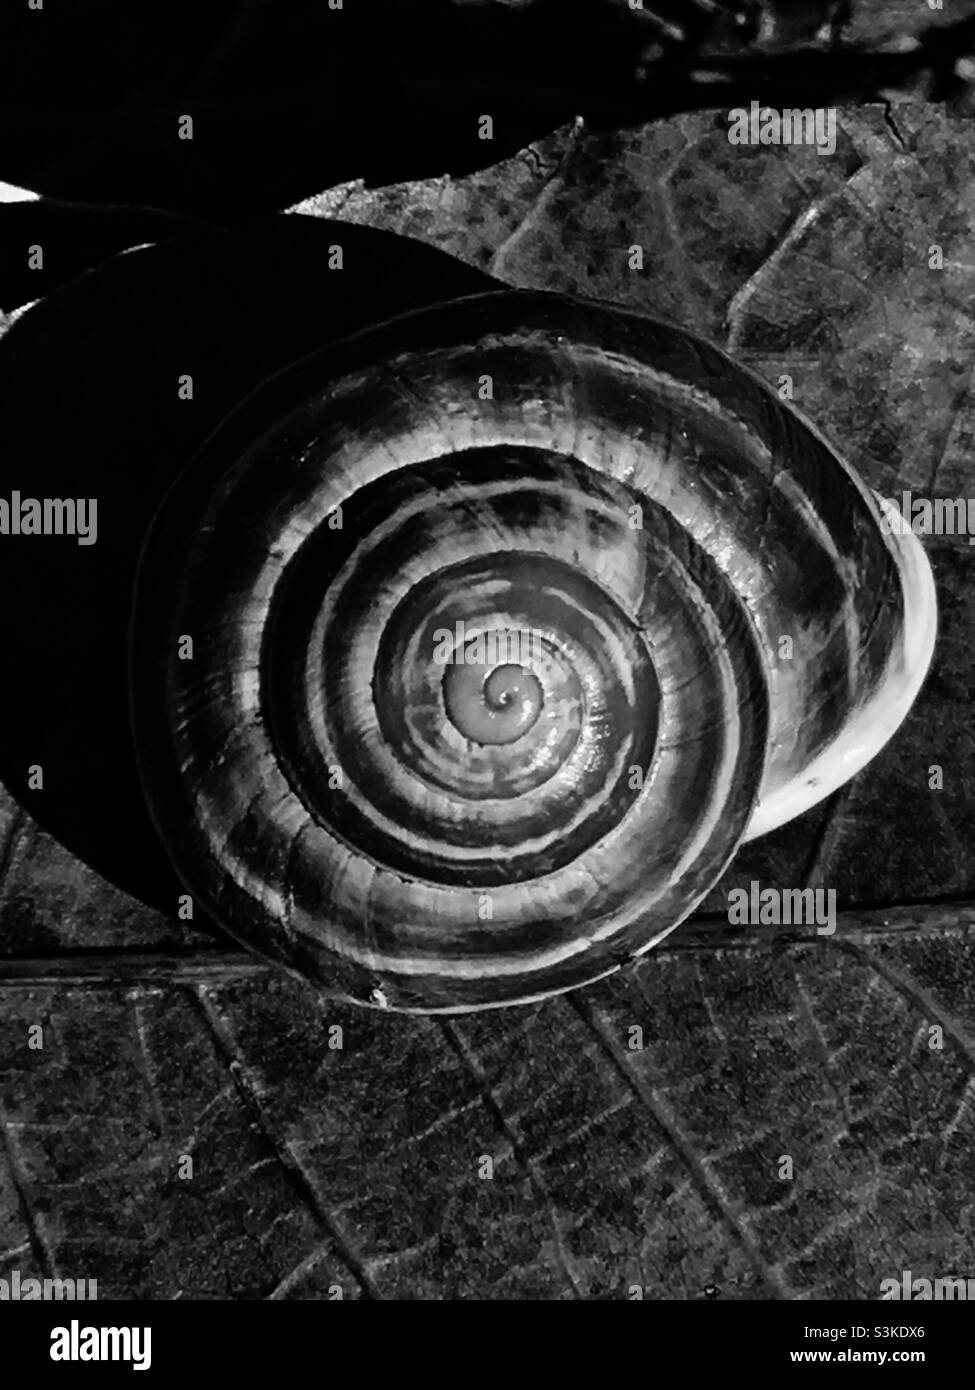 Snail shell with swirl pattern Stock Photo